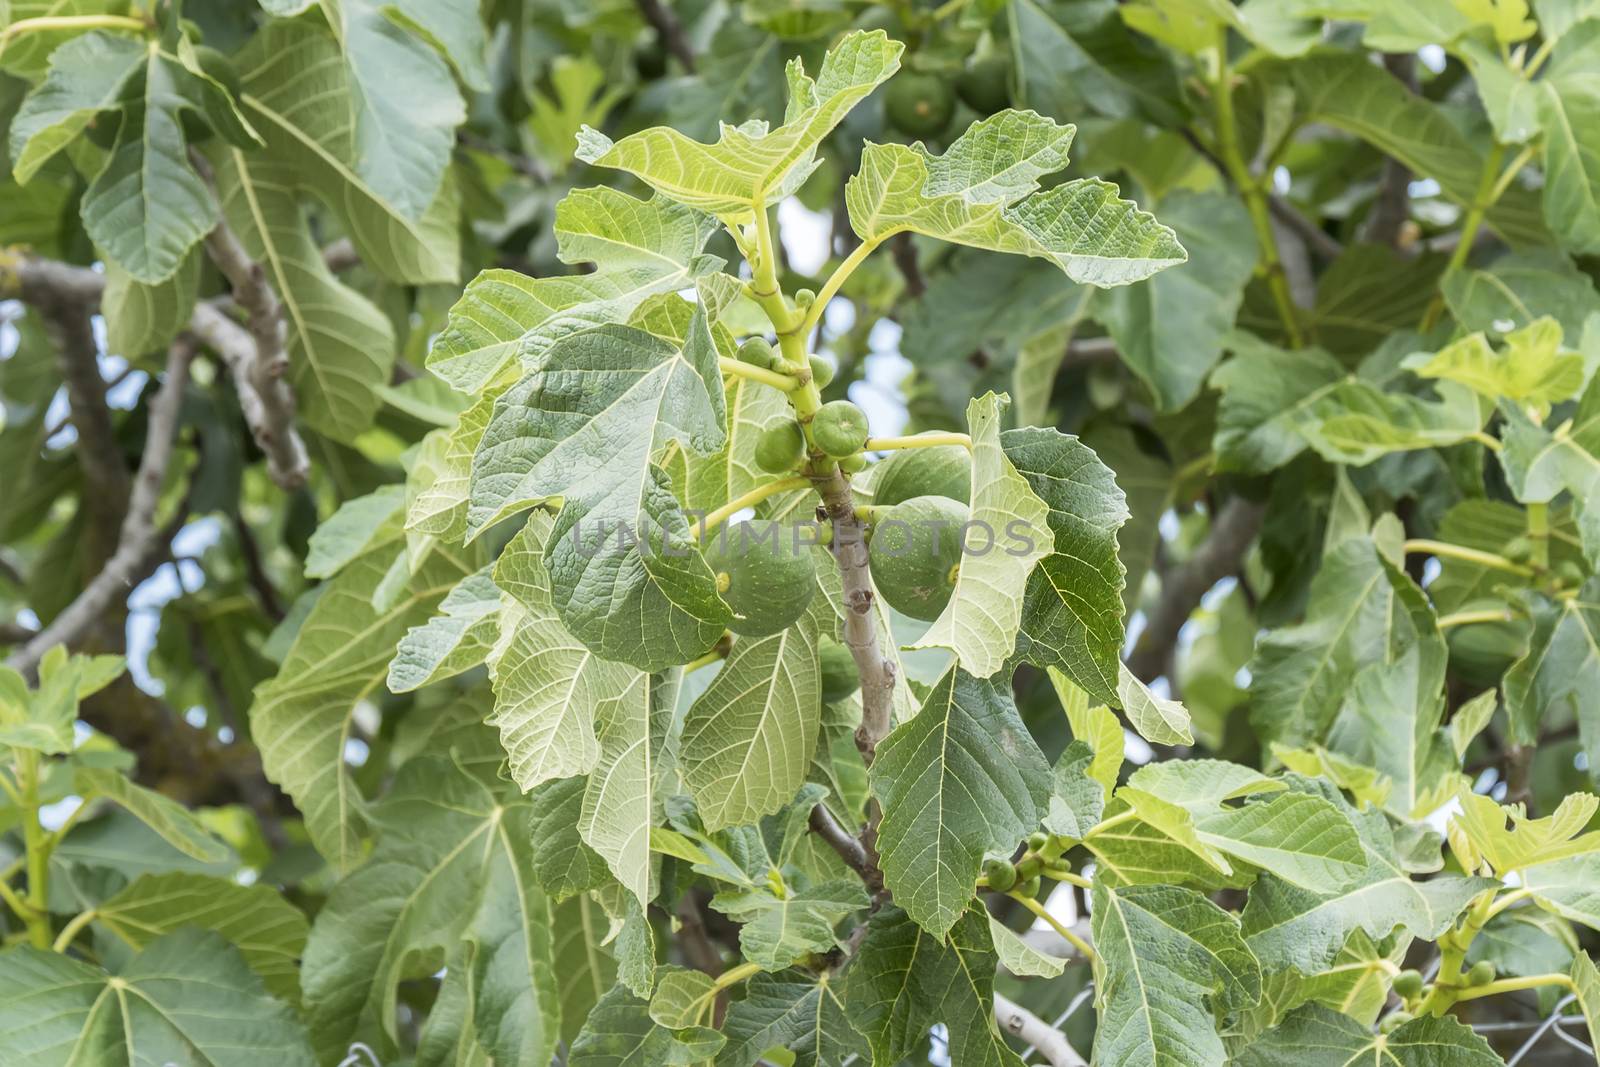 Fig tree, leafs, unripe figs by max8xam